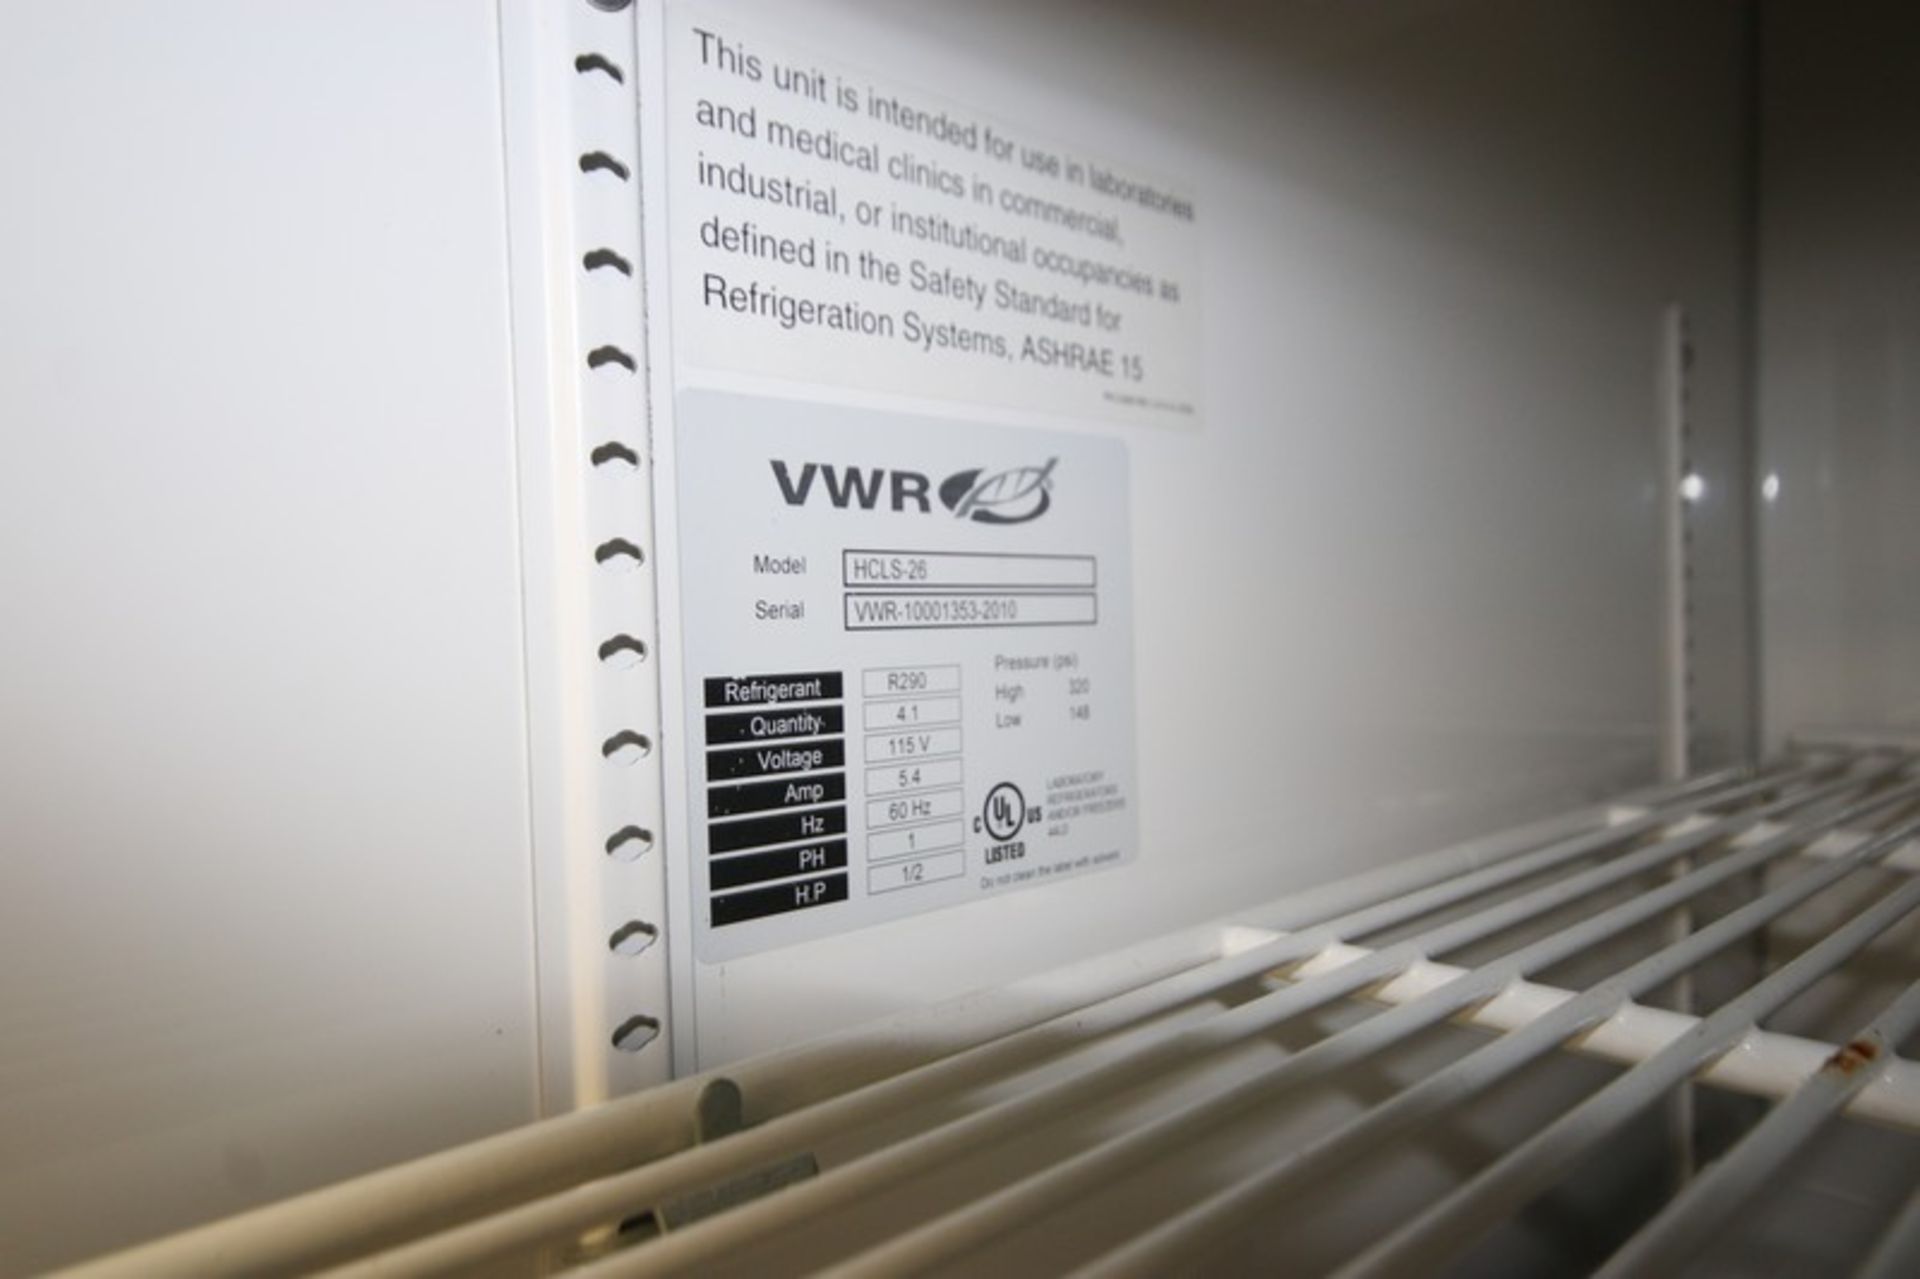 VWR Lab Refrigerator, M/N HCLS-26, S/N VWR-10001353-2010, R290 Refrigerant, 115 Volts (LOCATED IN - Image 3 of 3